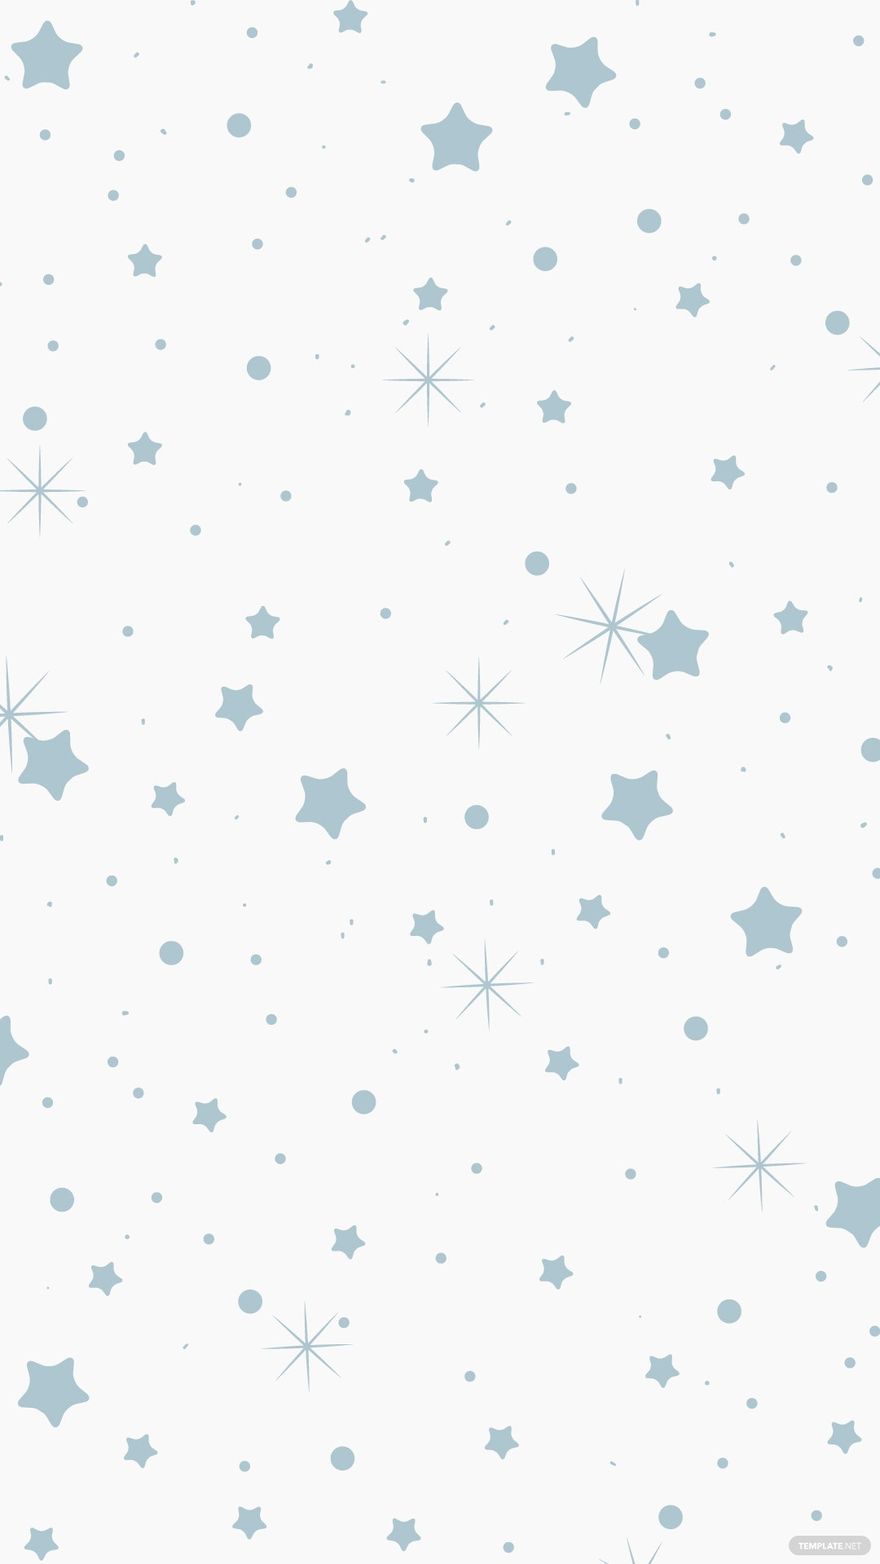 Free Pastel Blue Star Background in Illustrator, EPS, SVG, JPG